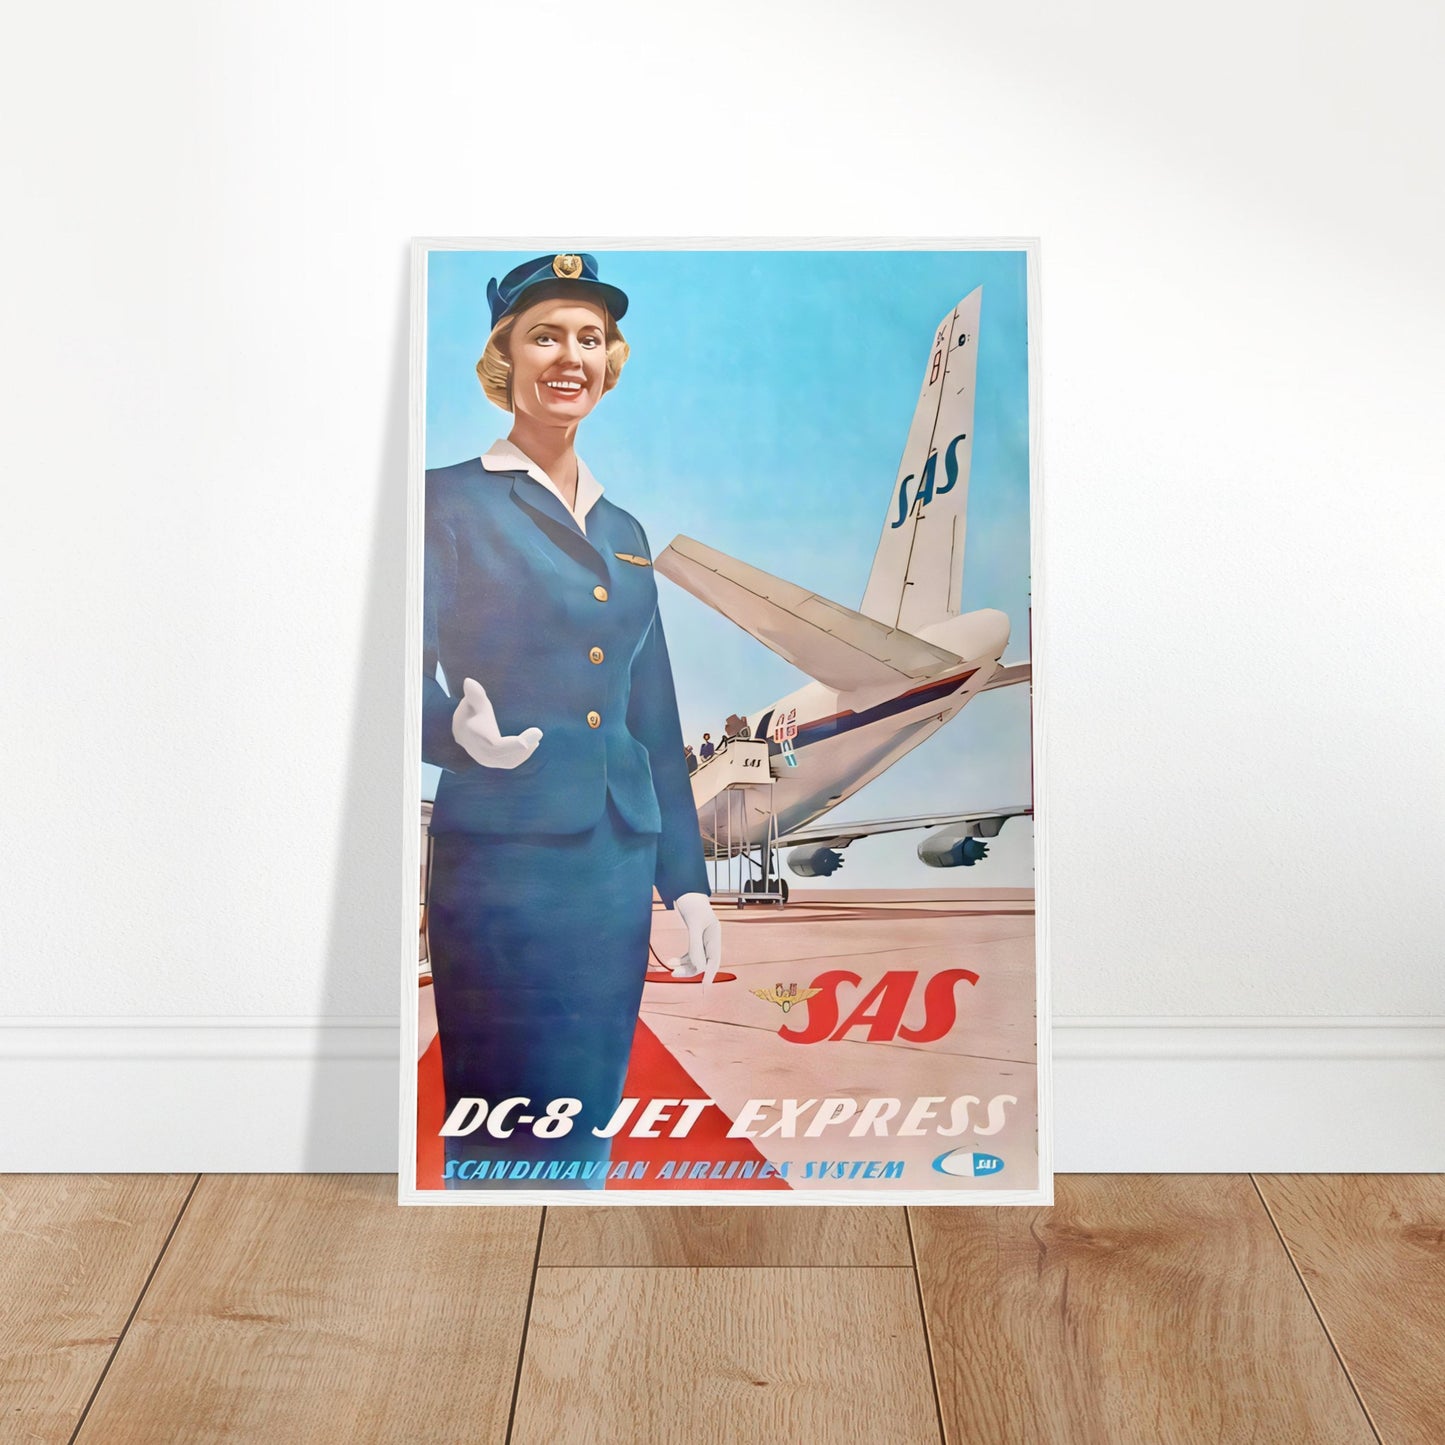 SAS Vintage Poster Reprint on Premium Matte Paper - Posterify